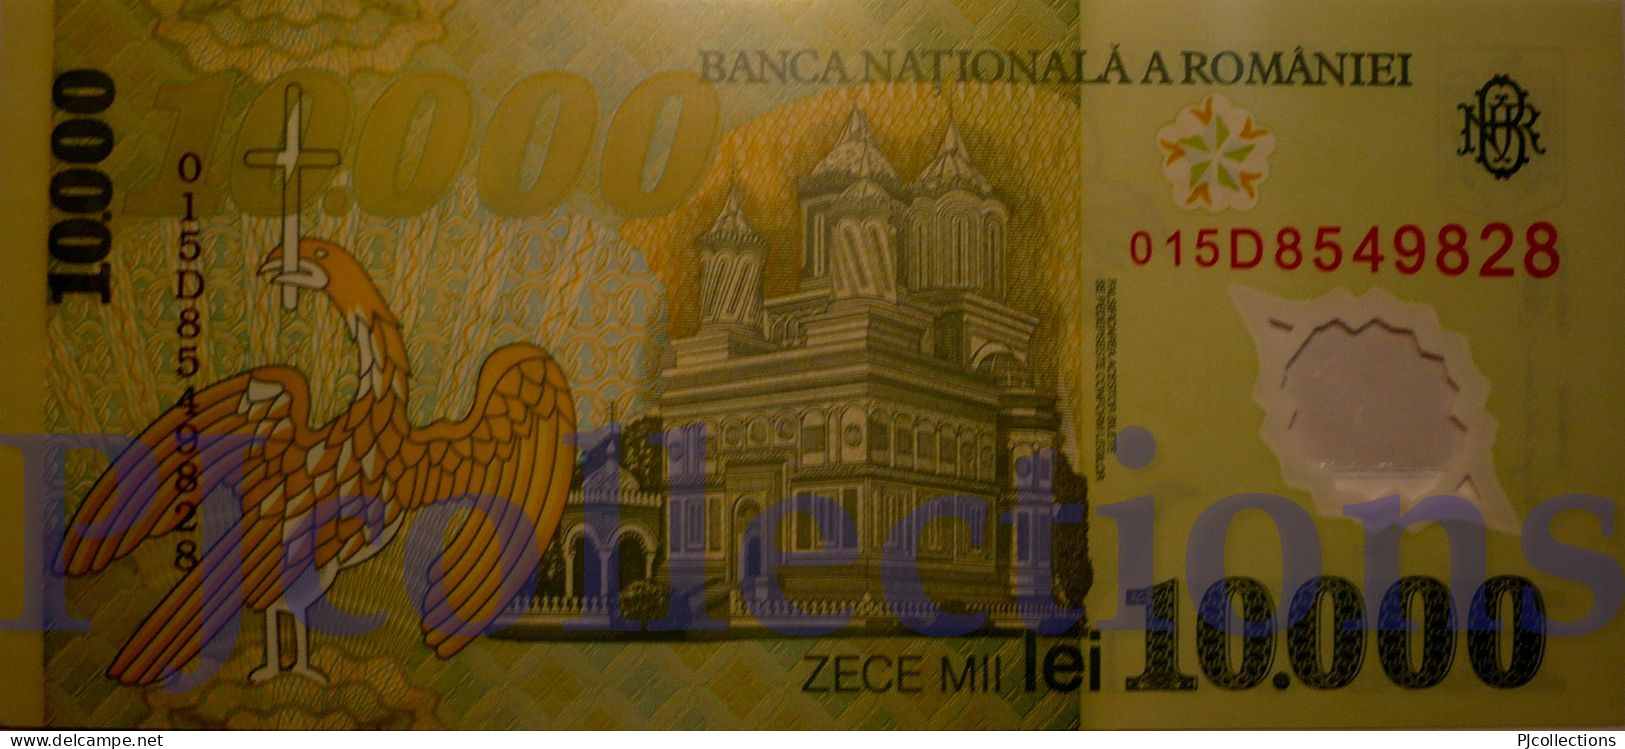 ROMANIA 10000 LEI 2000 PICK 112b POLYMER UNC - Roemenië